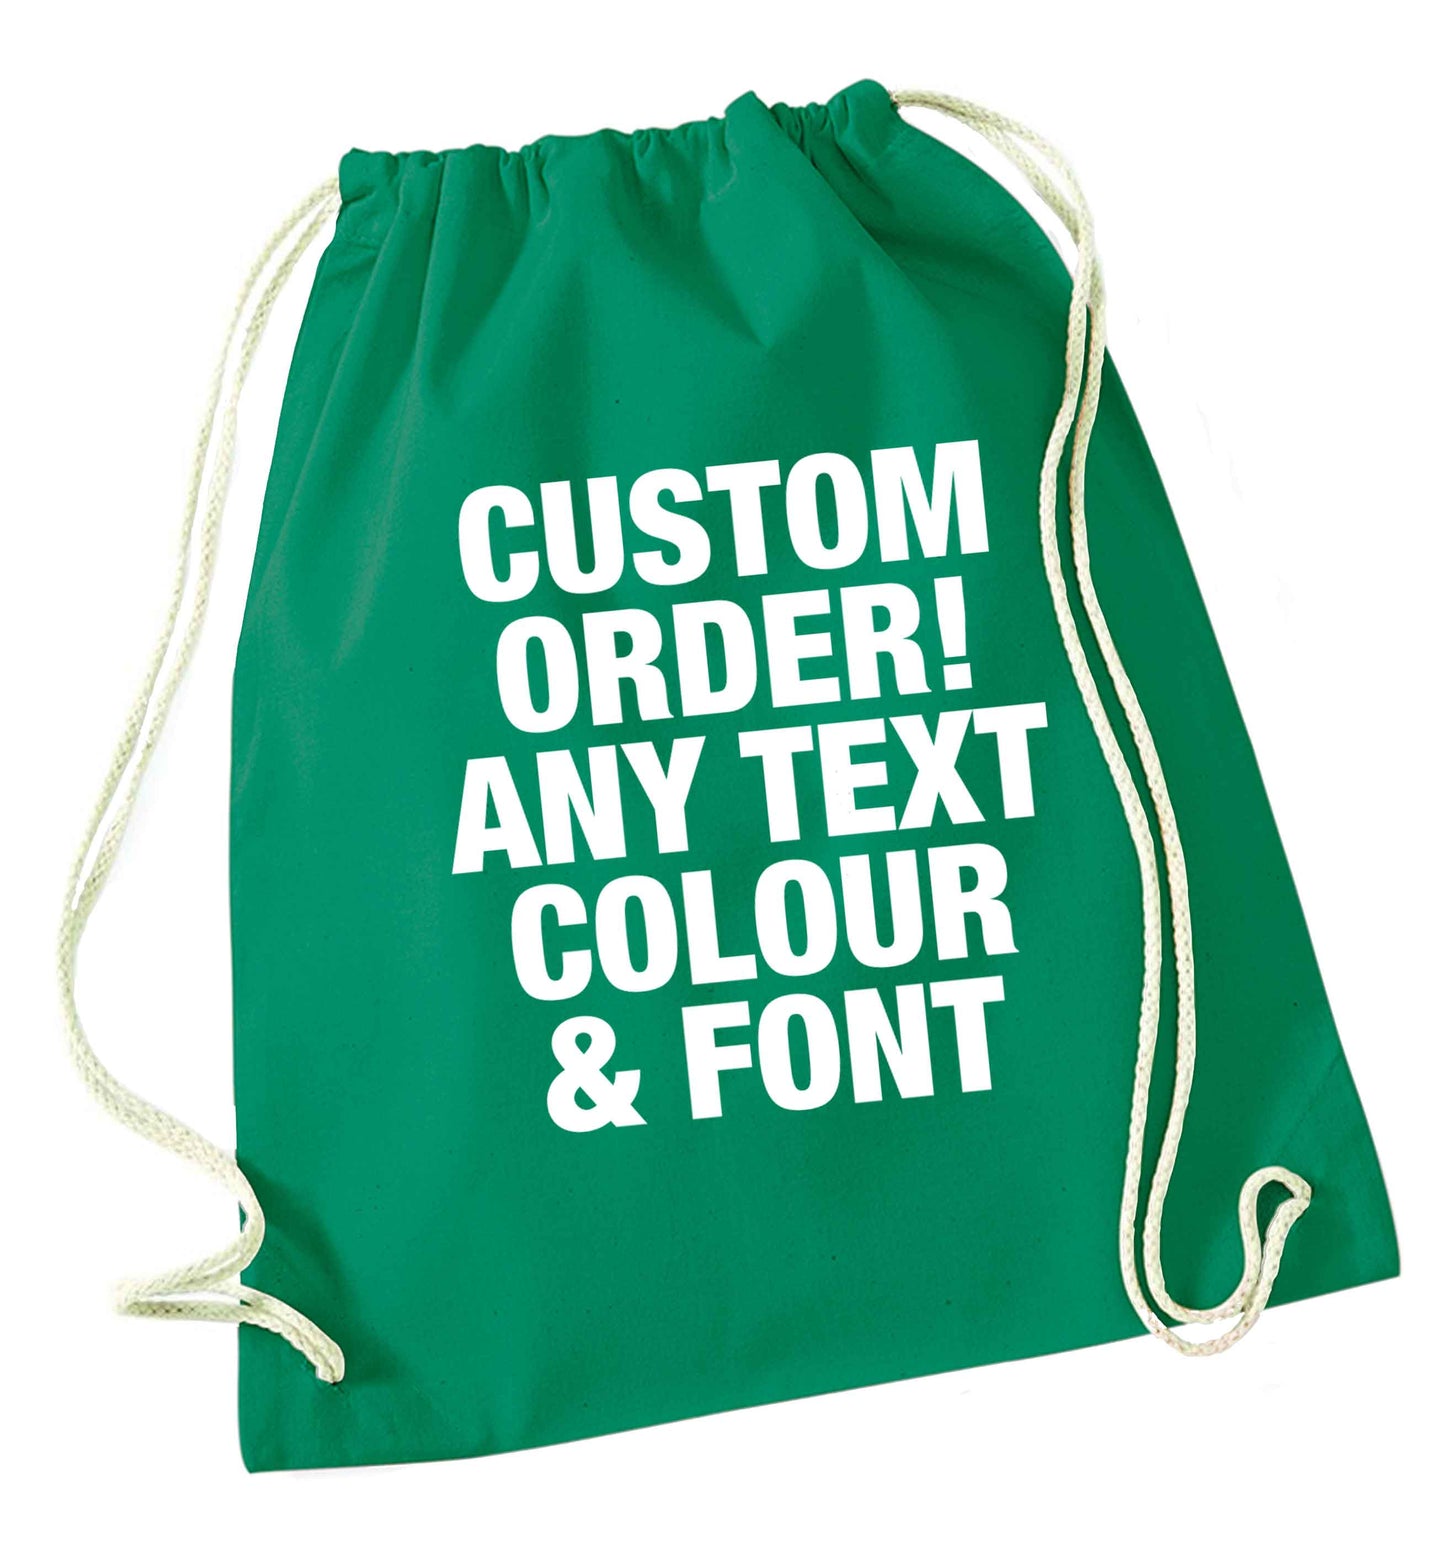 Custom order any text colour and font green drawstring bag